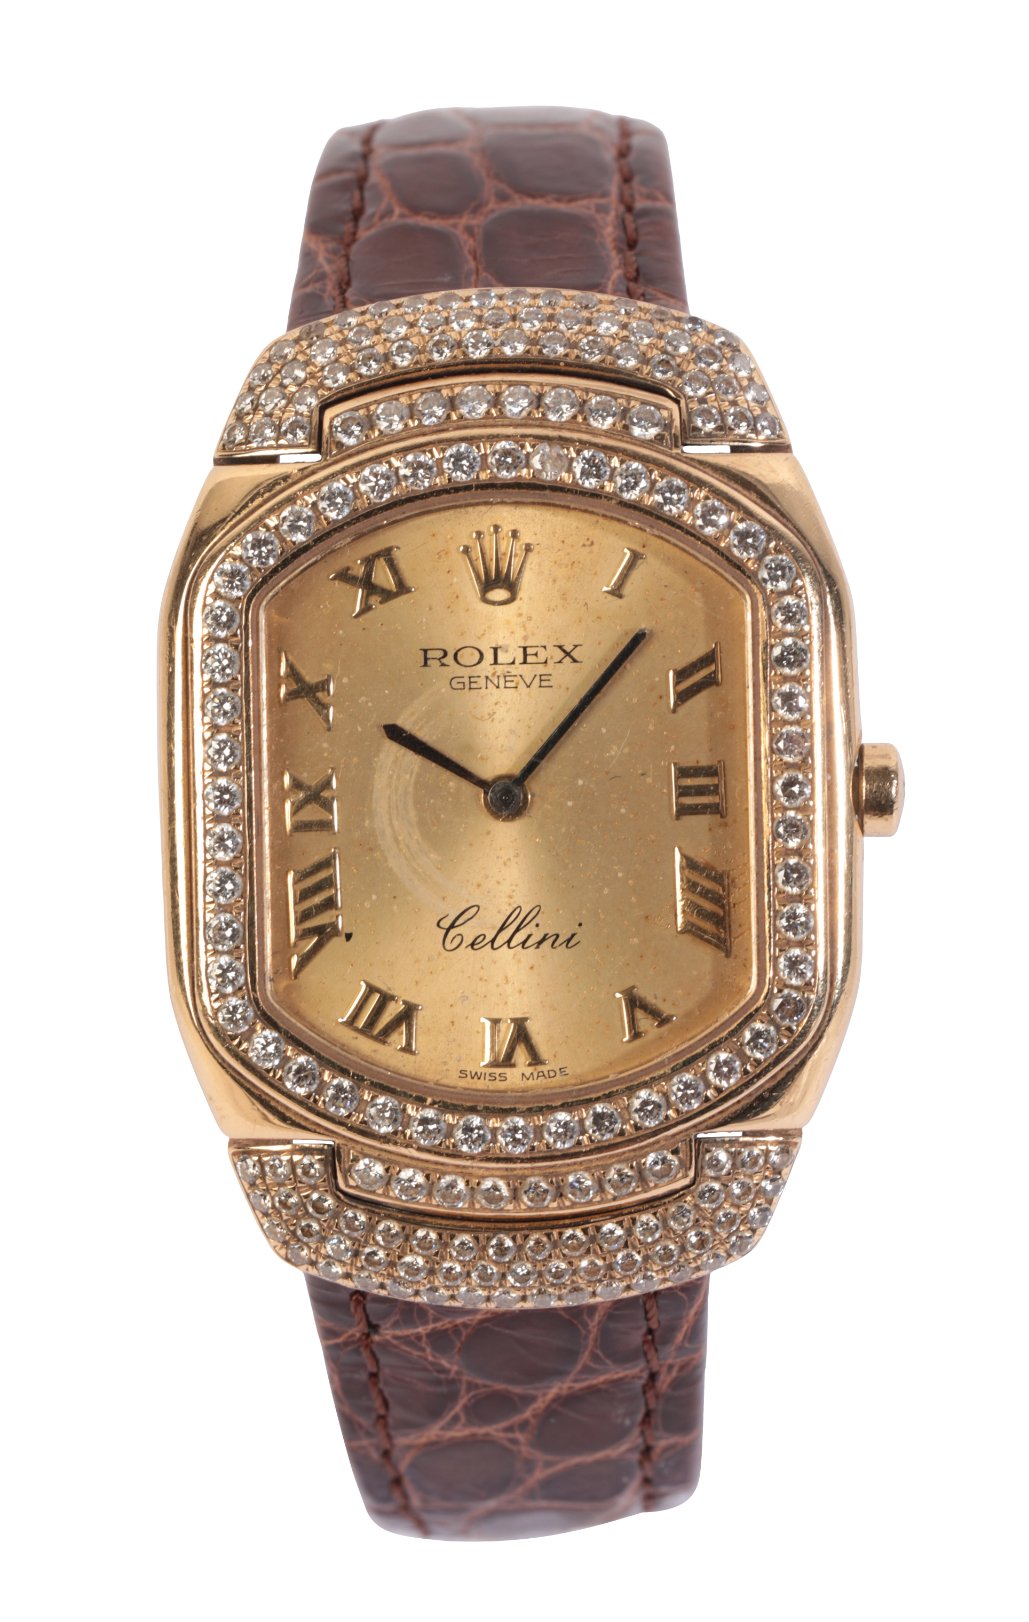 ROLEX CELLINI: A LADY'S 18CT GOLD DIAMOND-SET WRISTWATCH